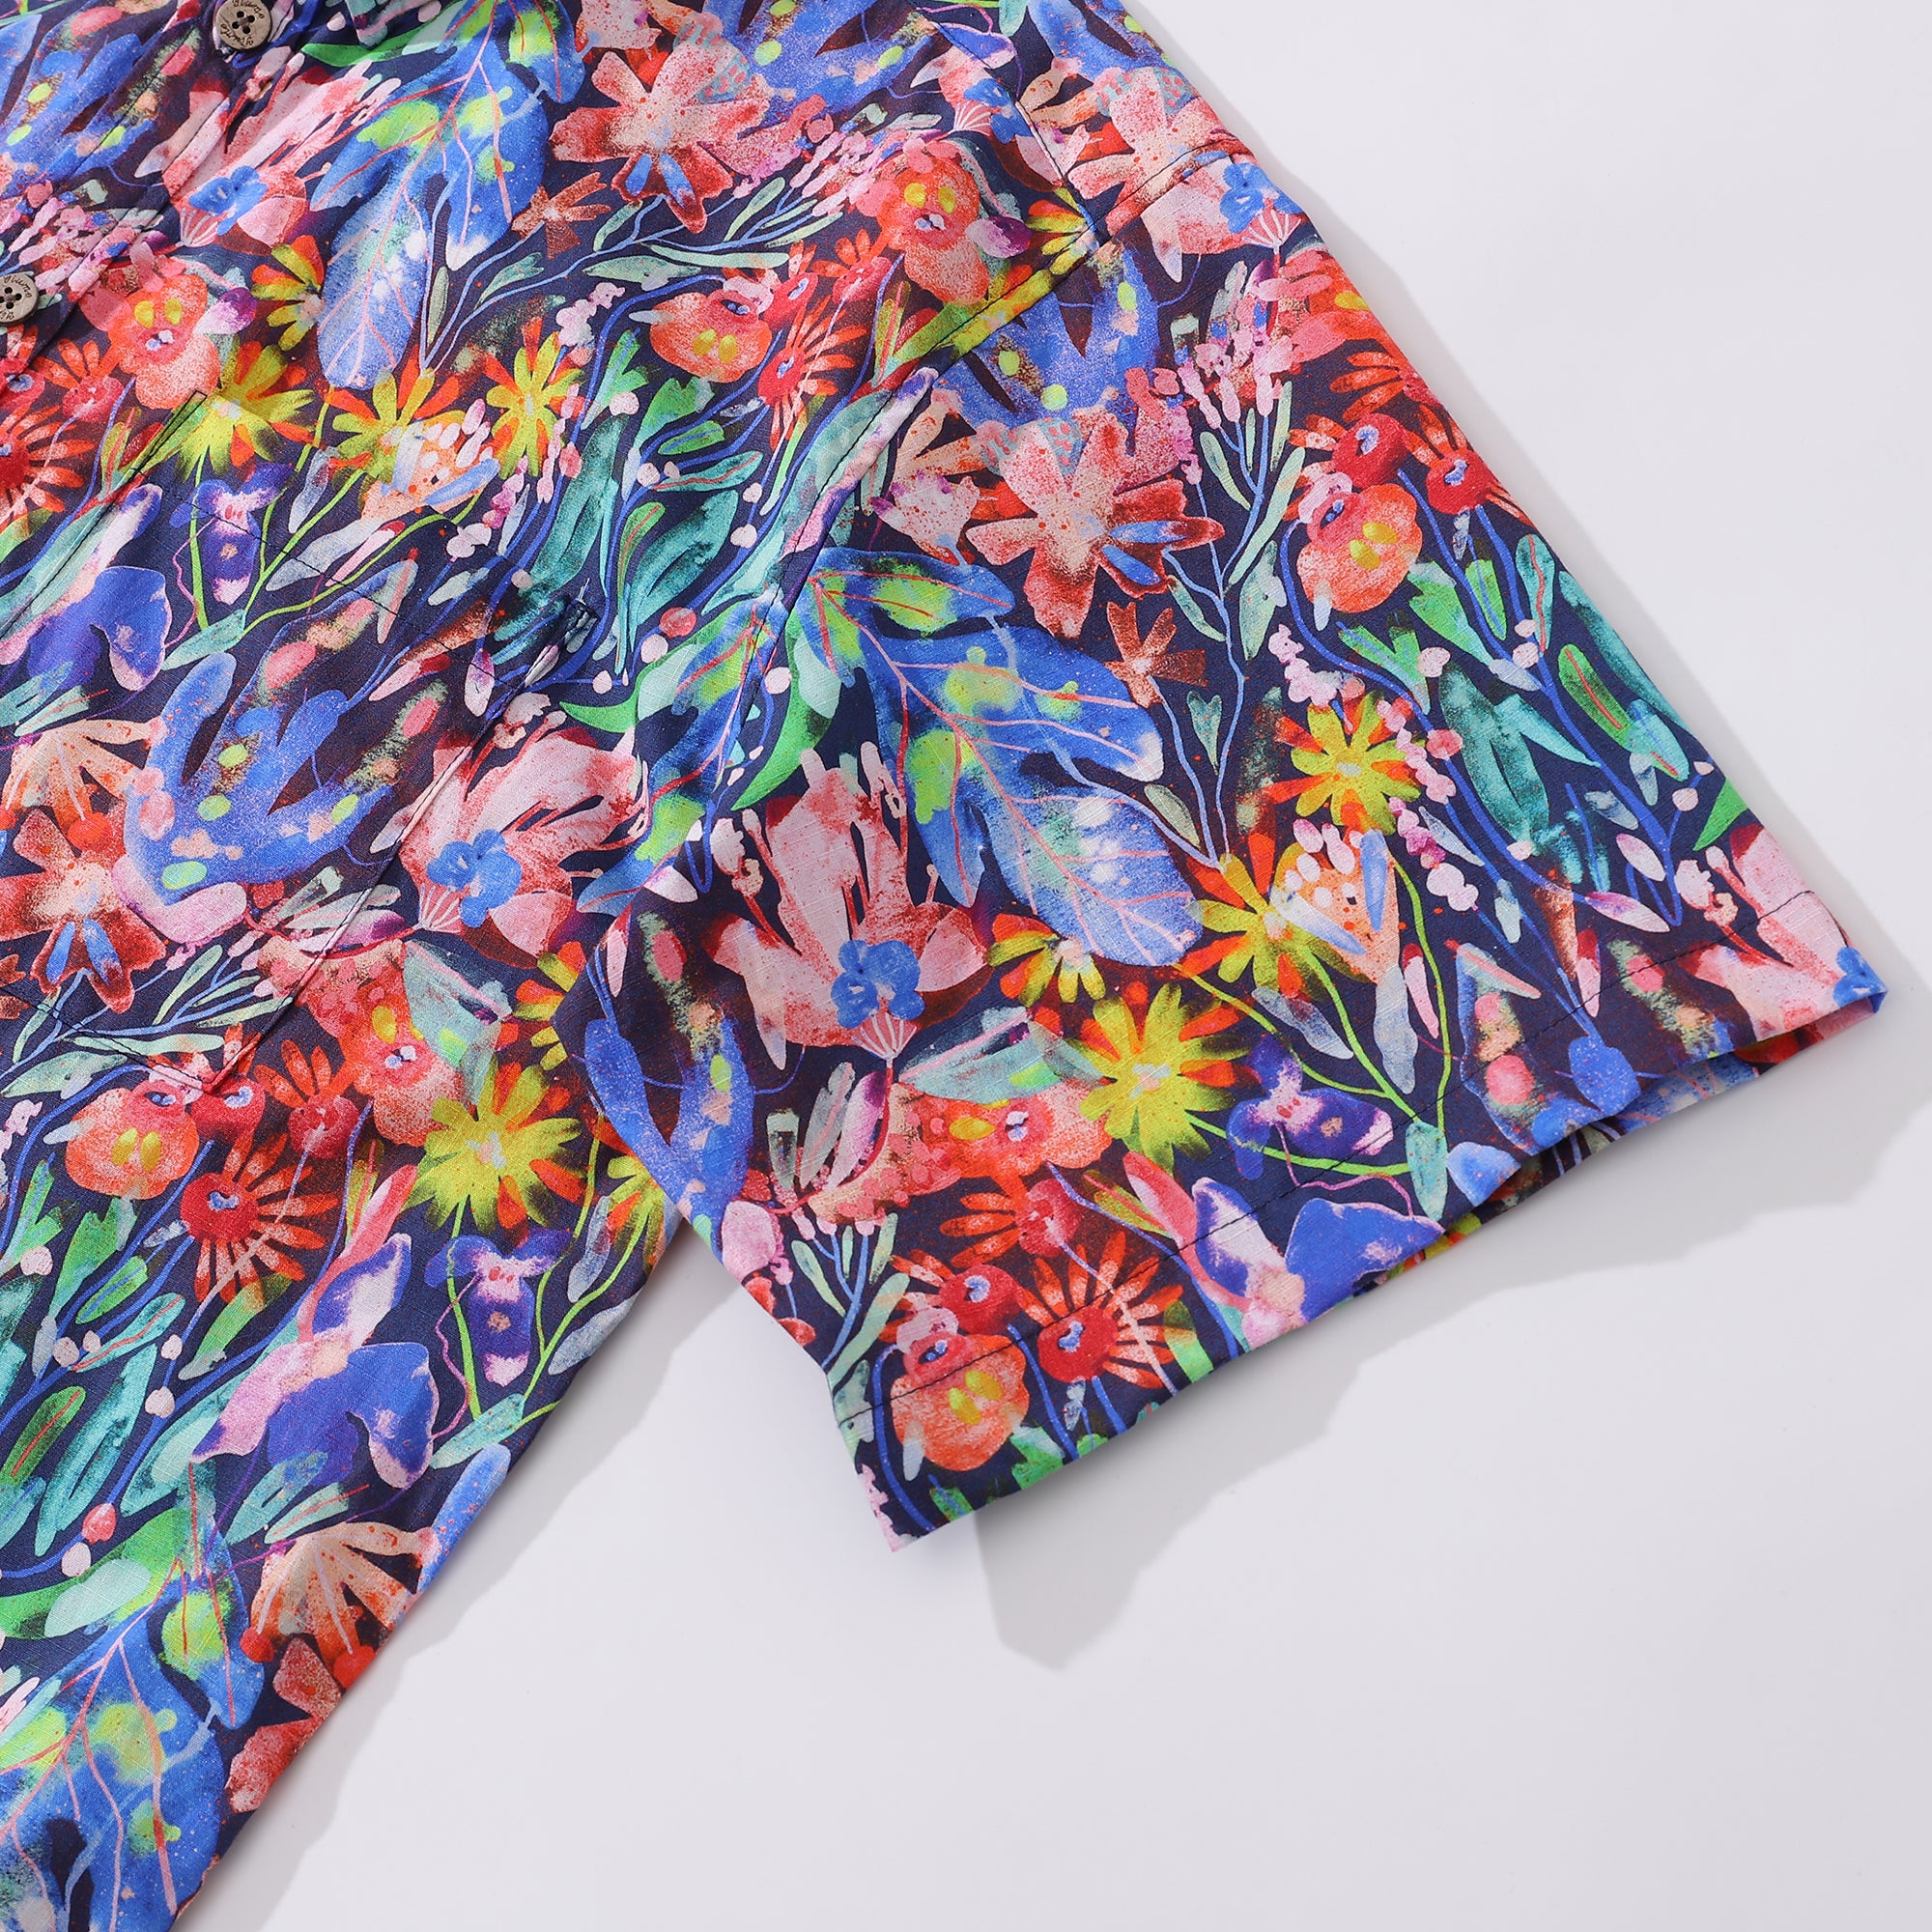 1930s Hawaiian Shirt For Men Floral Canvas Cotton Button-down Short Sleeve Camp Shirt